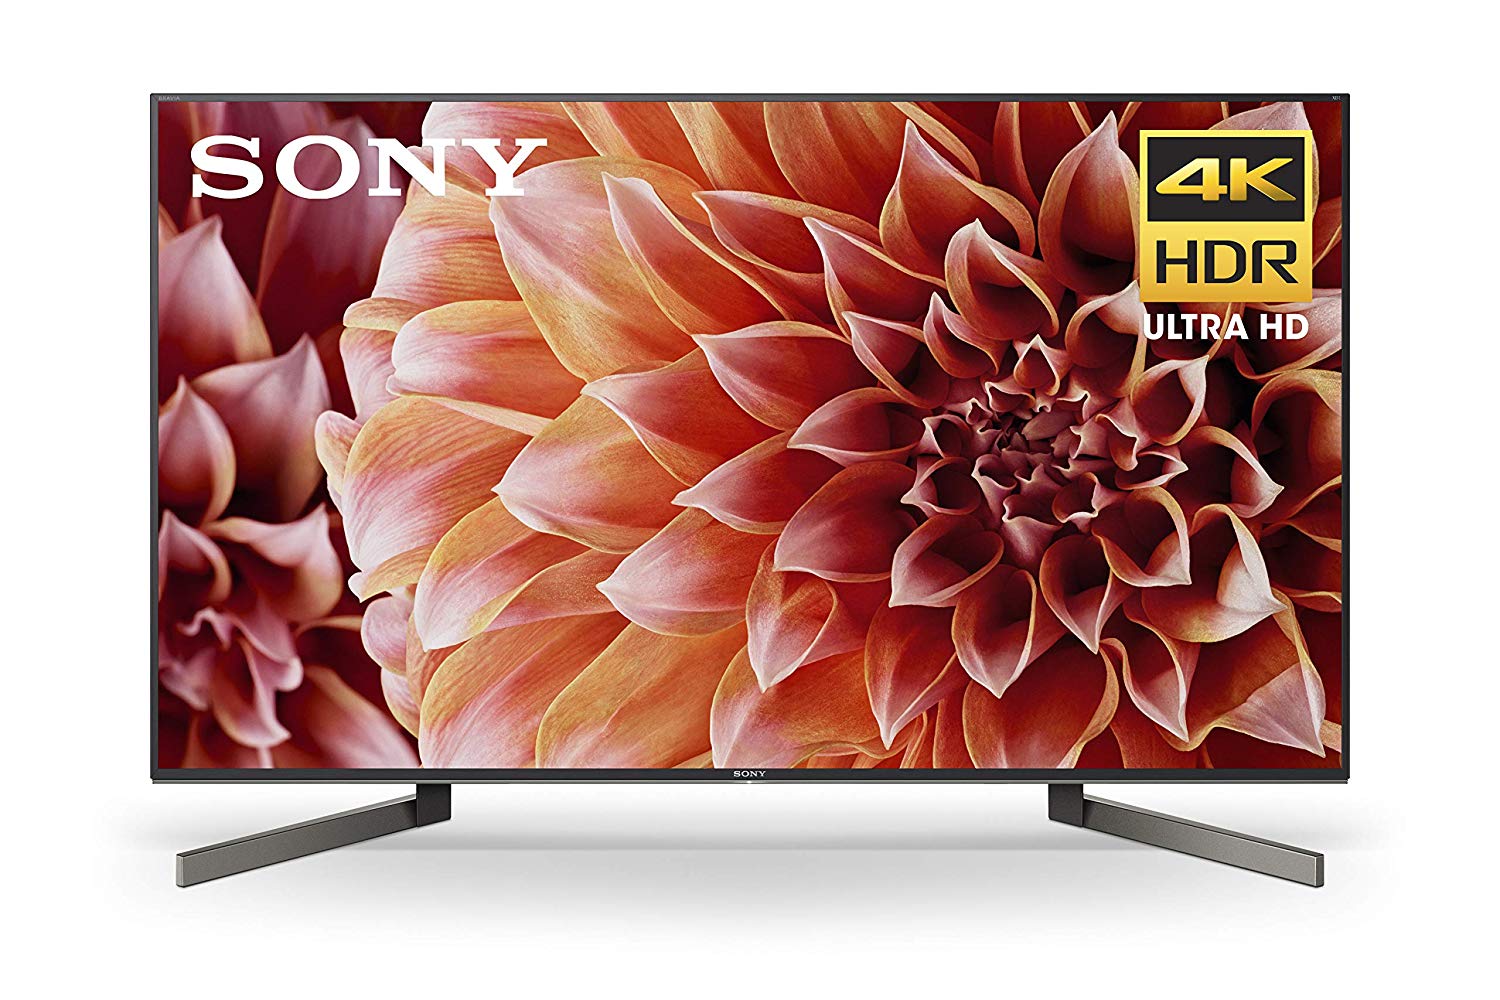 Sony XBR65X900F X-Motion Clarity Smart TV, 65-Inch